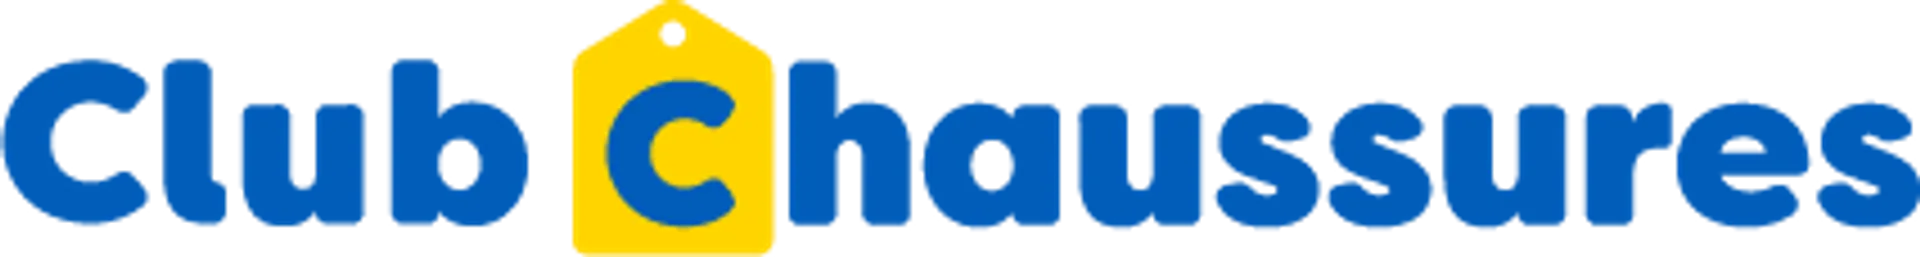 CLUB CHAUSSURE logo de circulaire